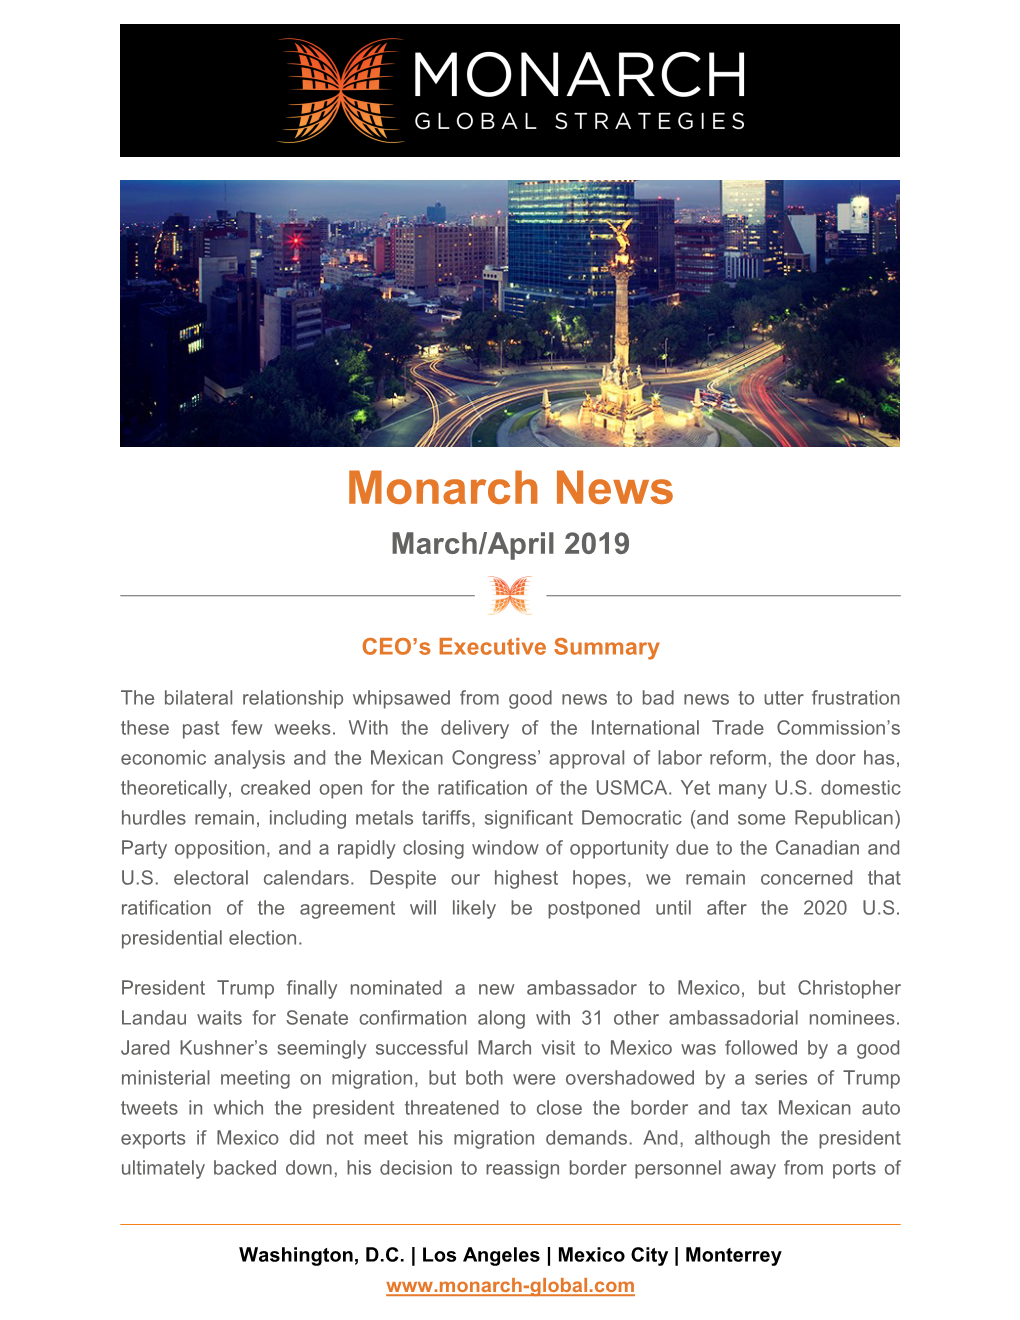 Monarch News March/April 2019